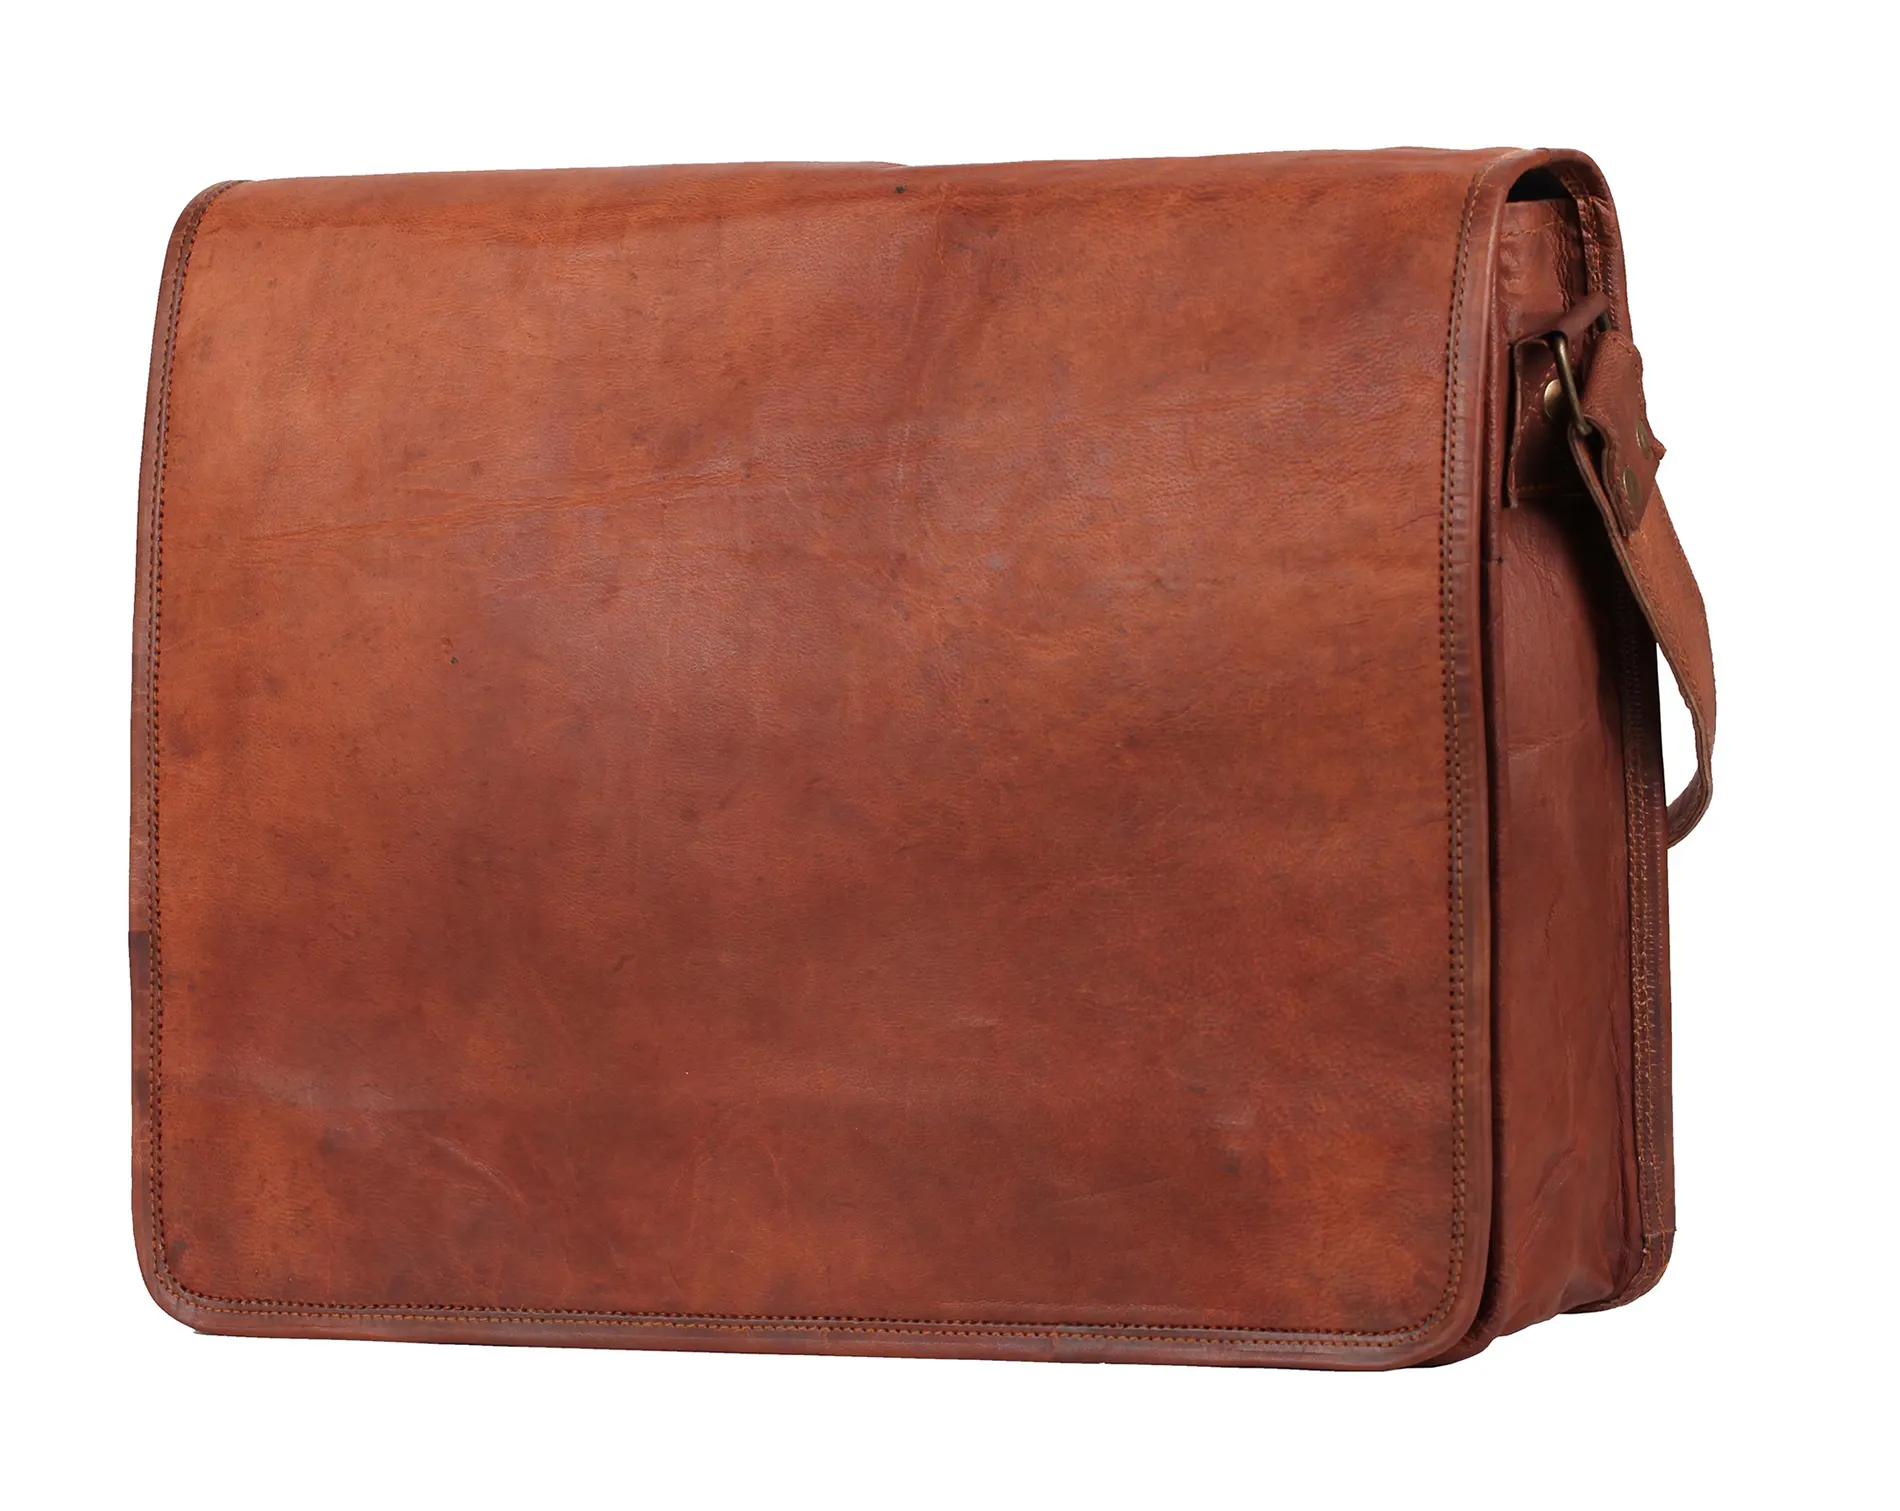 Full Grain Leather 11 inch iPad/Tablet Messenger Bag Satchel Office Crossbody Shoulder School College Bags for Men and Women